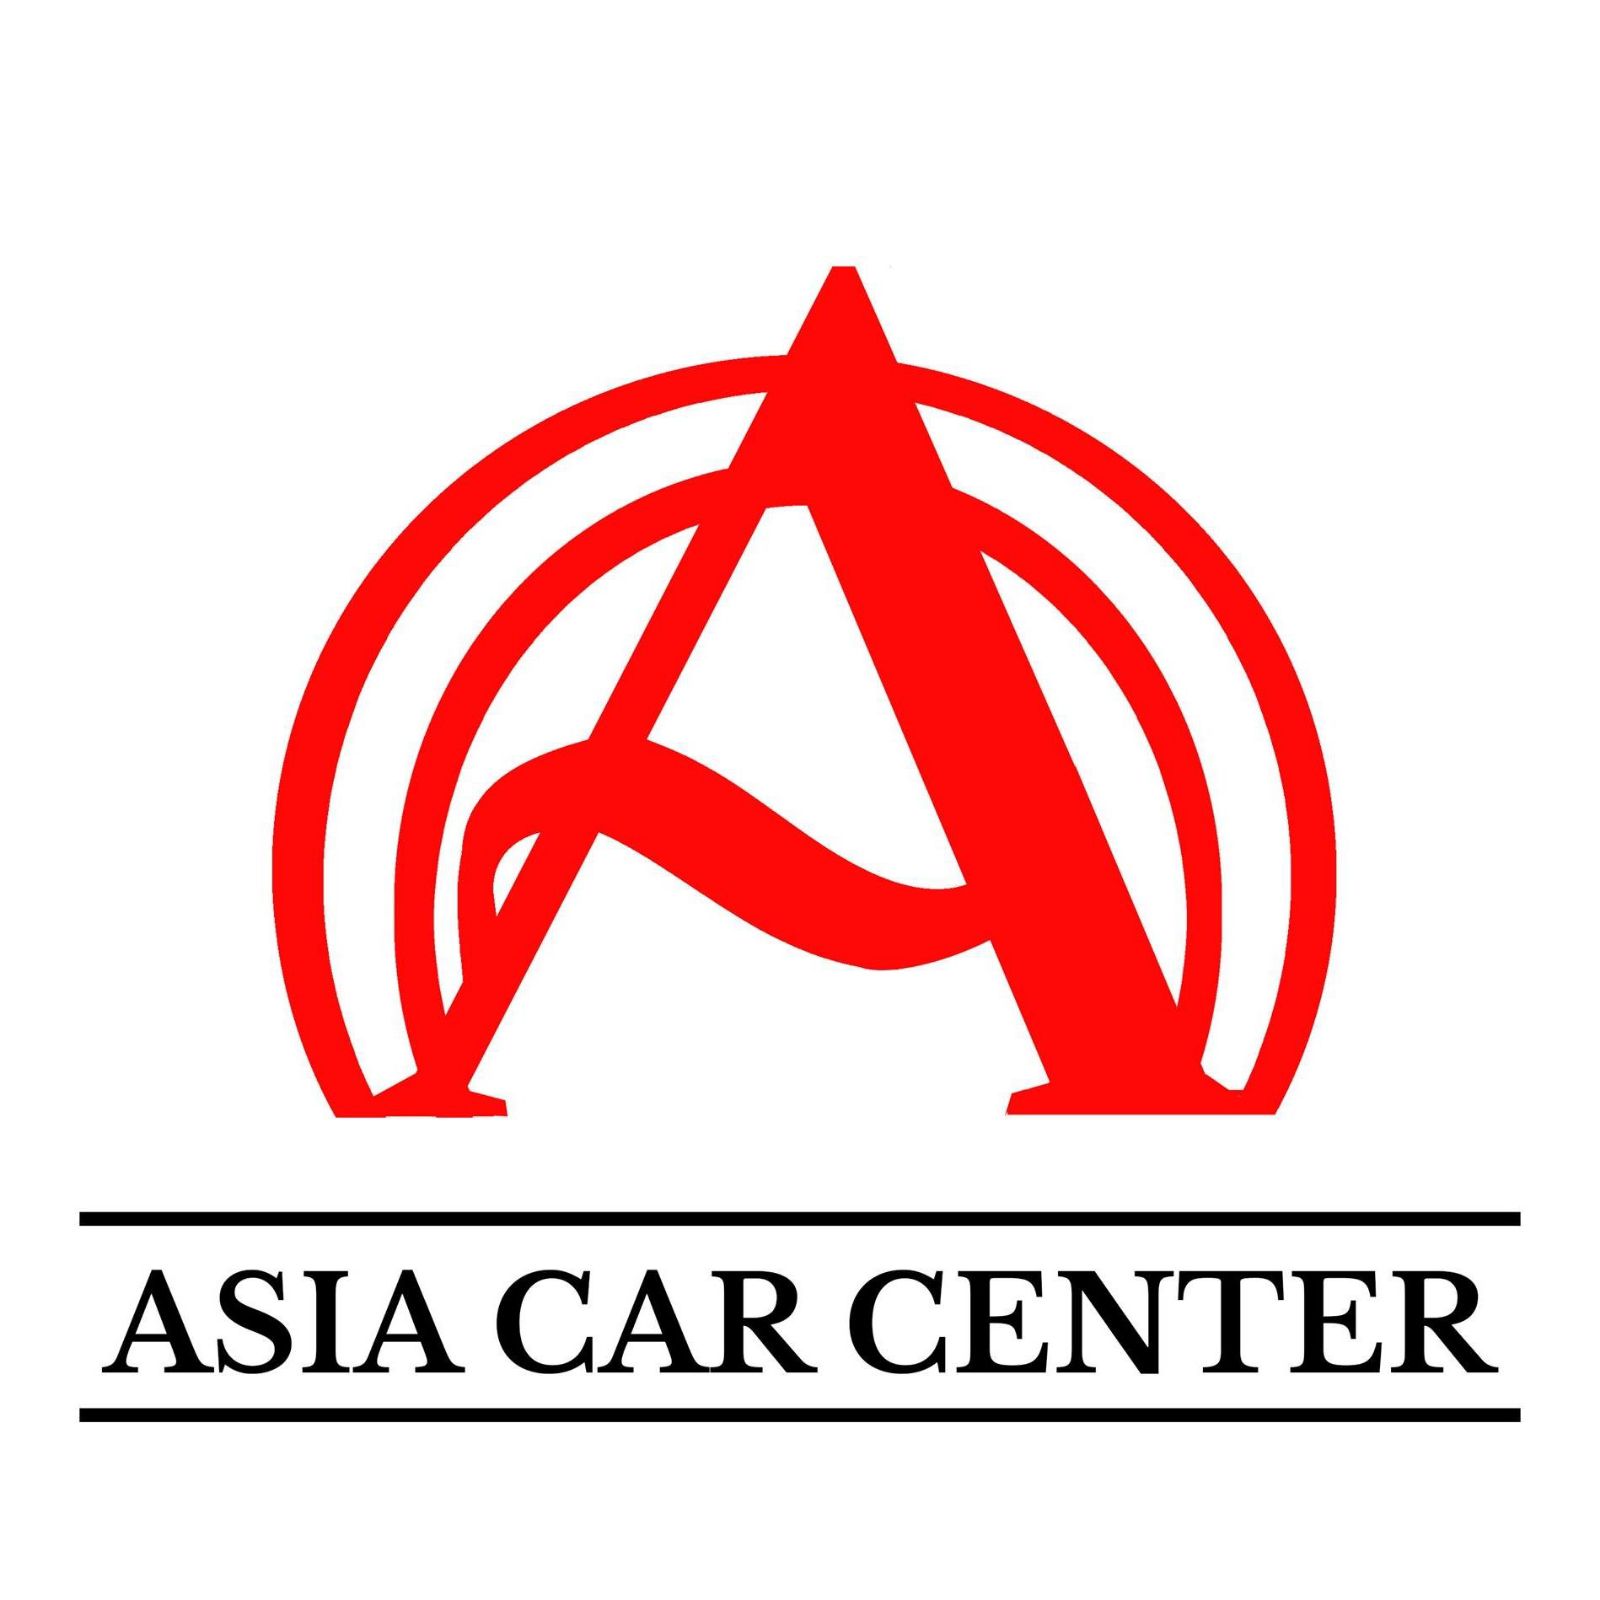 Asia Car Center